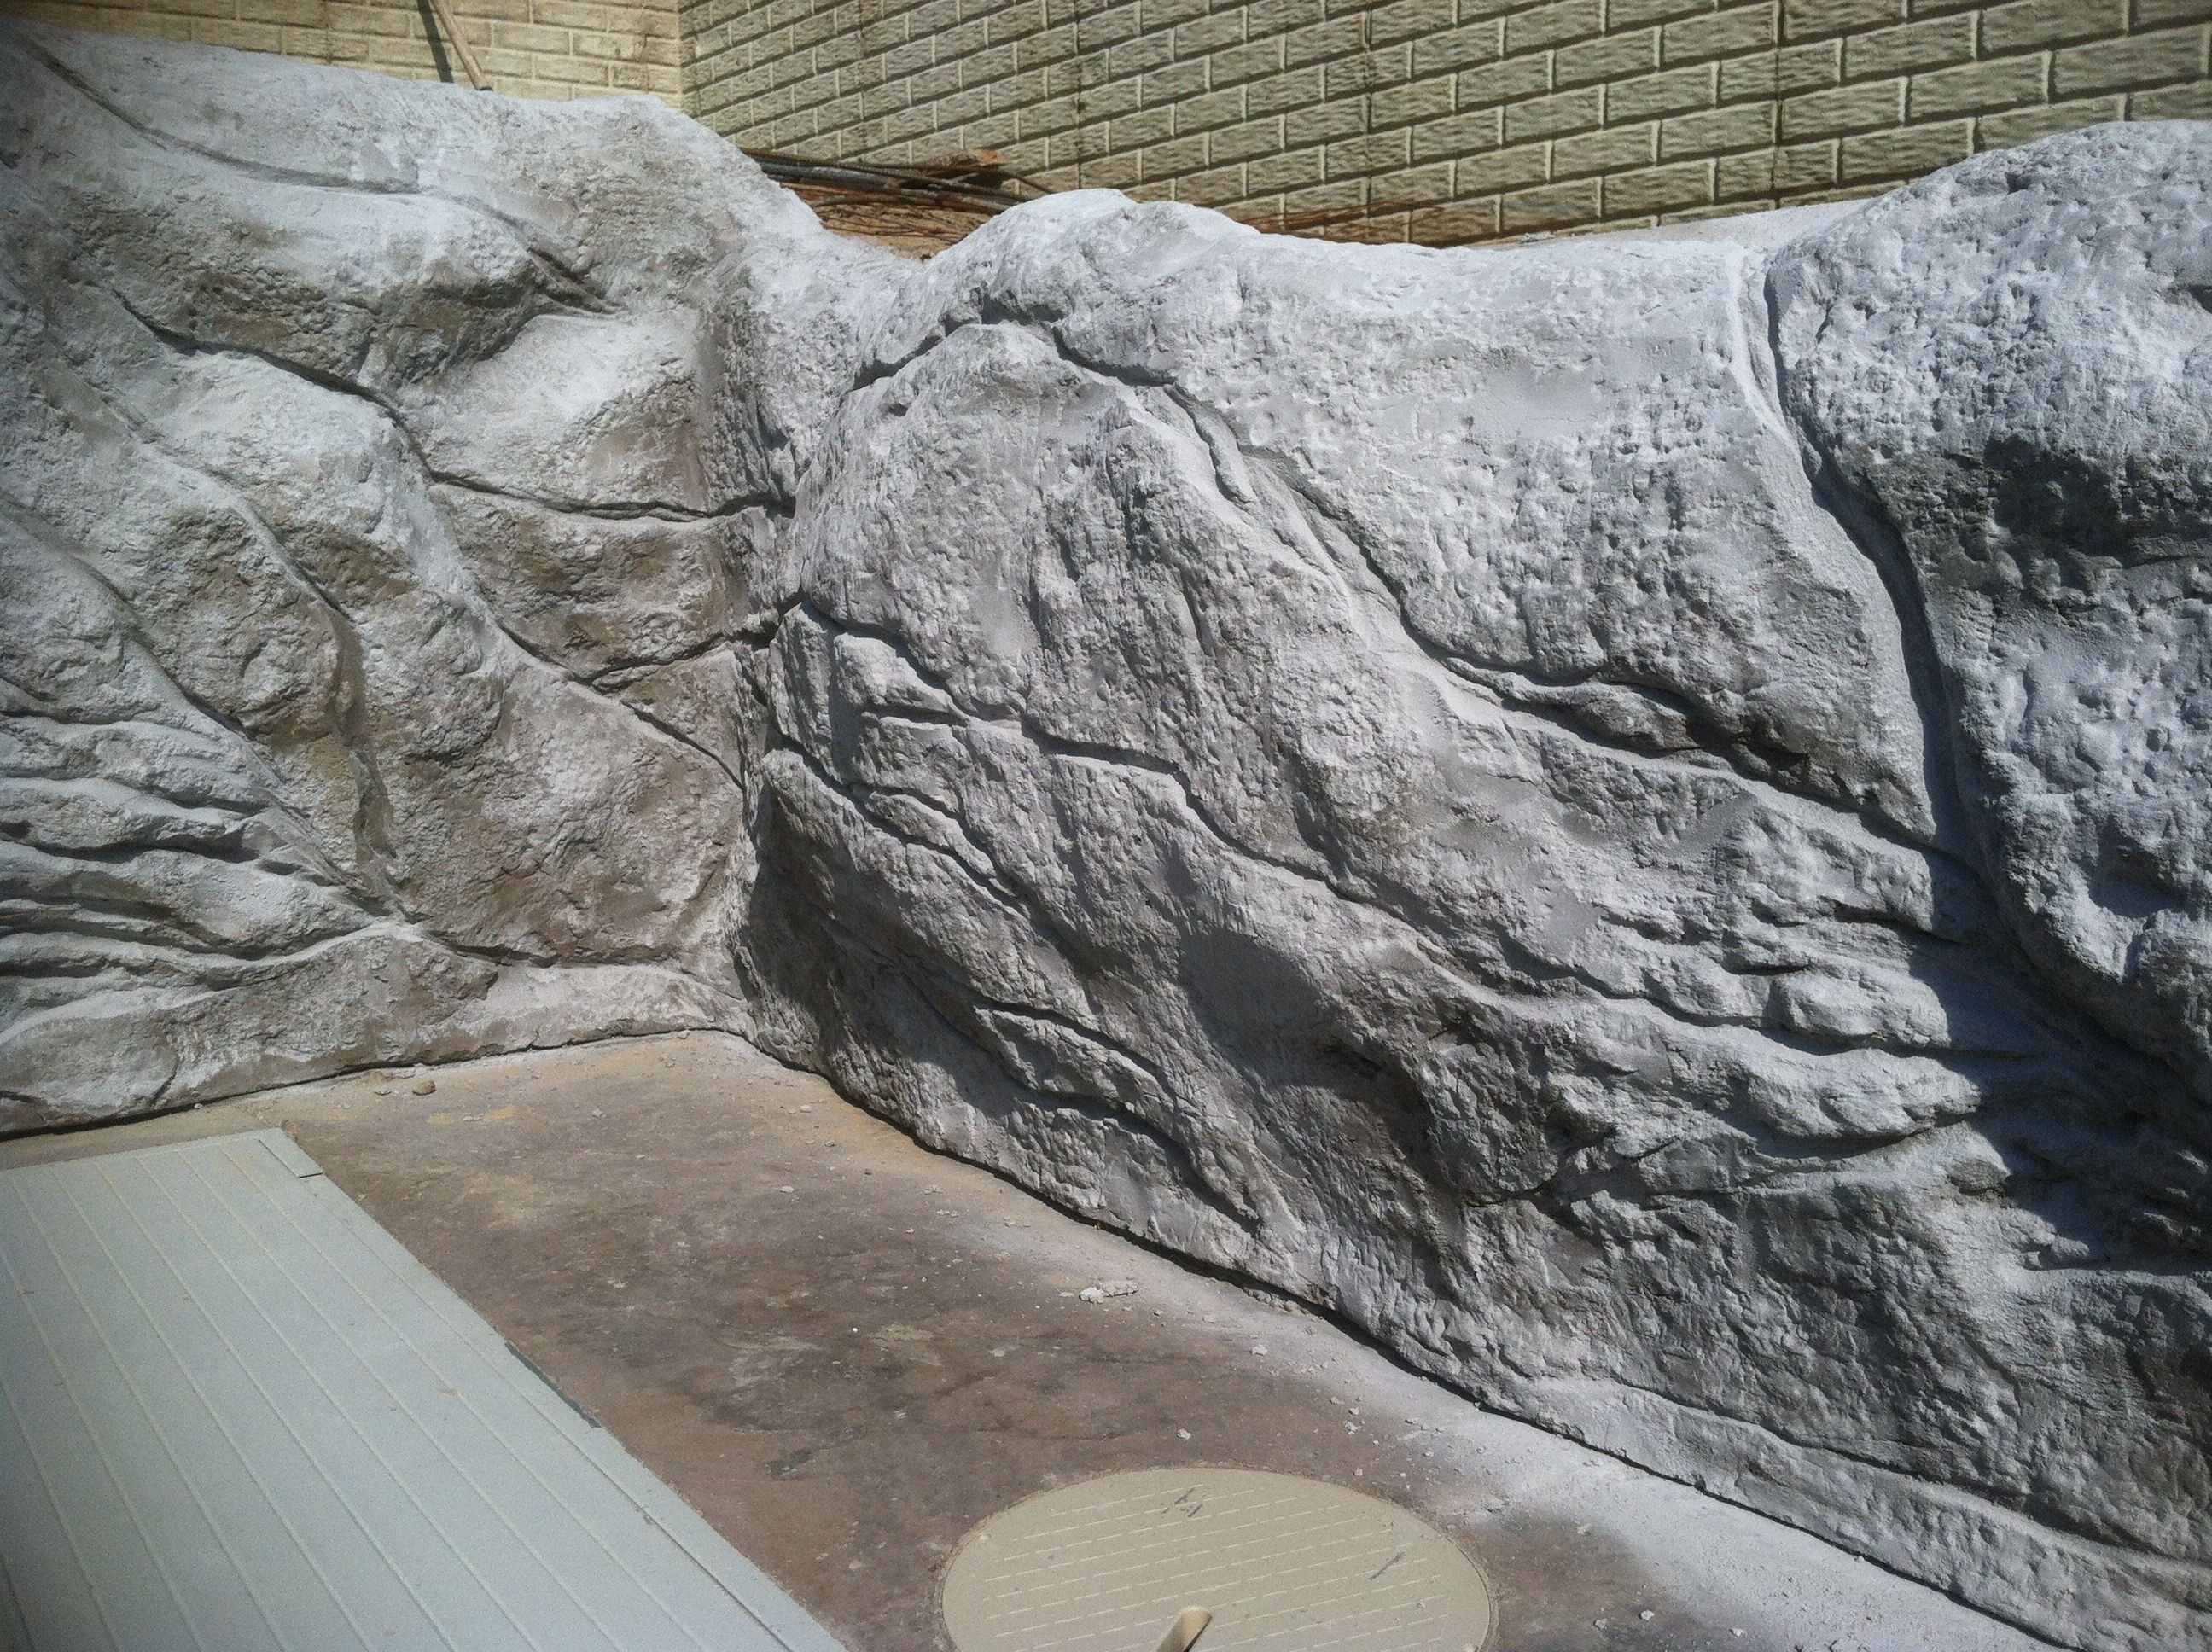 Concrete stone. Скала артбетон. Стена скала из артбетона. Искусственный камень из цемента. Искусственные скалы из бетона.